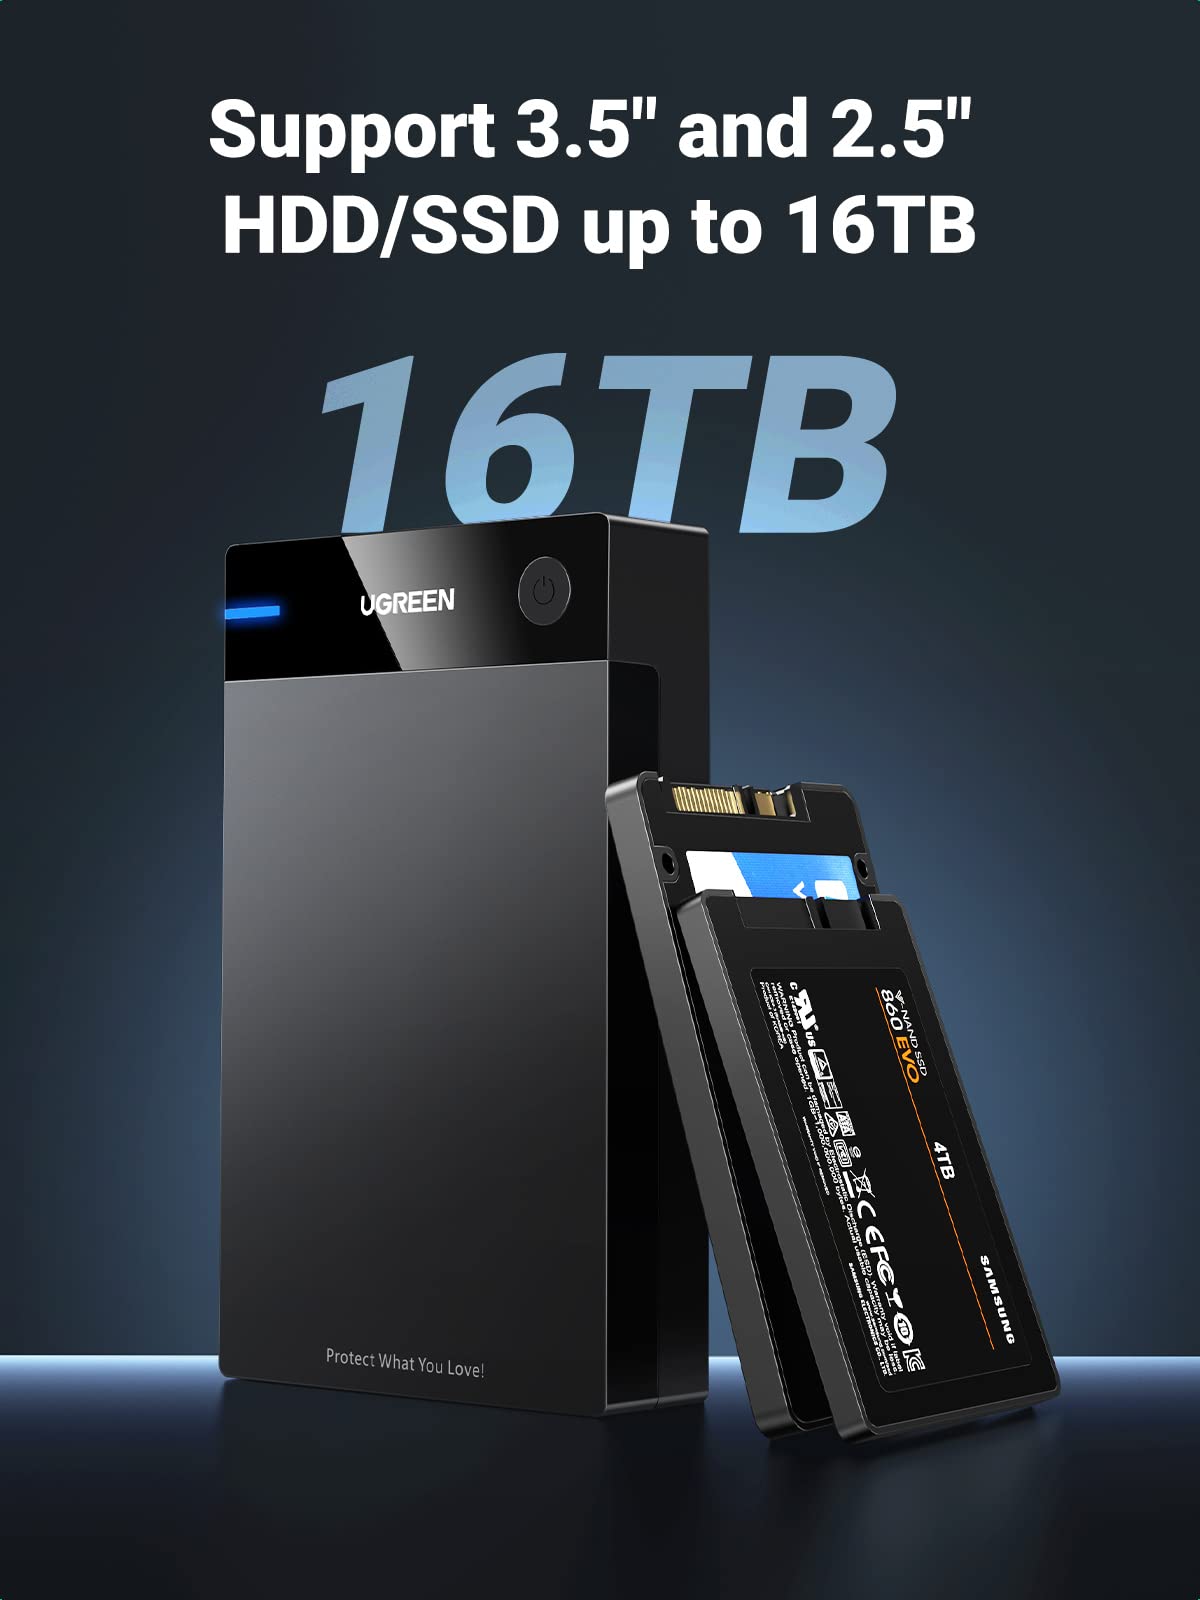 Ugreen USB 3.0 SATA HDD Enclosure - 16TB Support, Tool-free